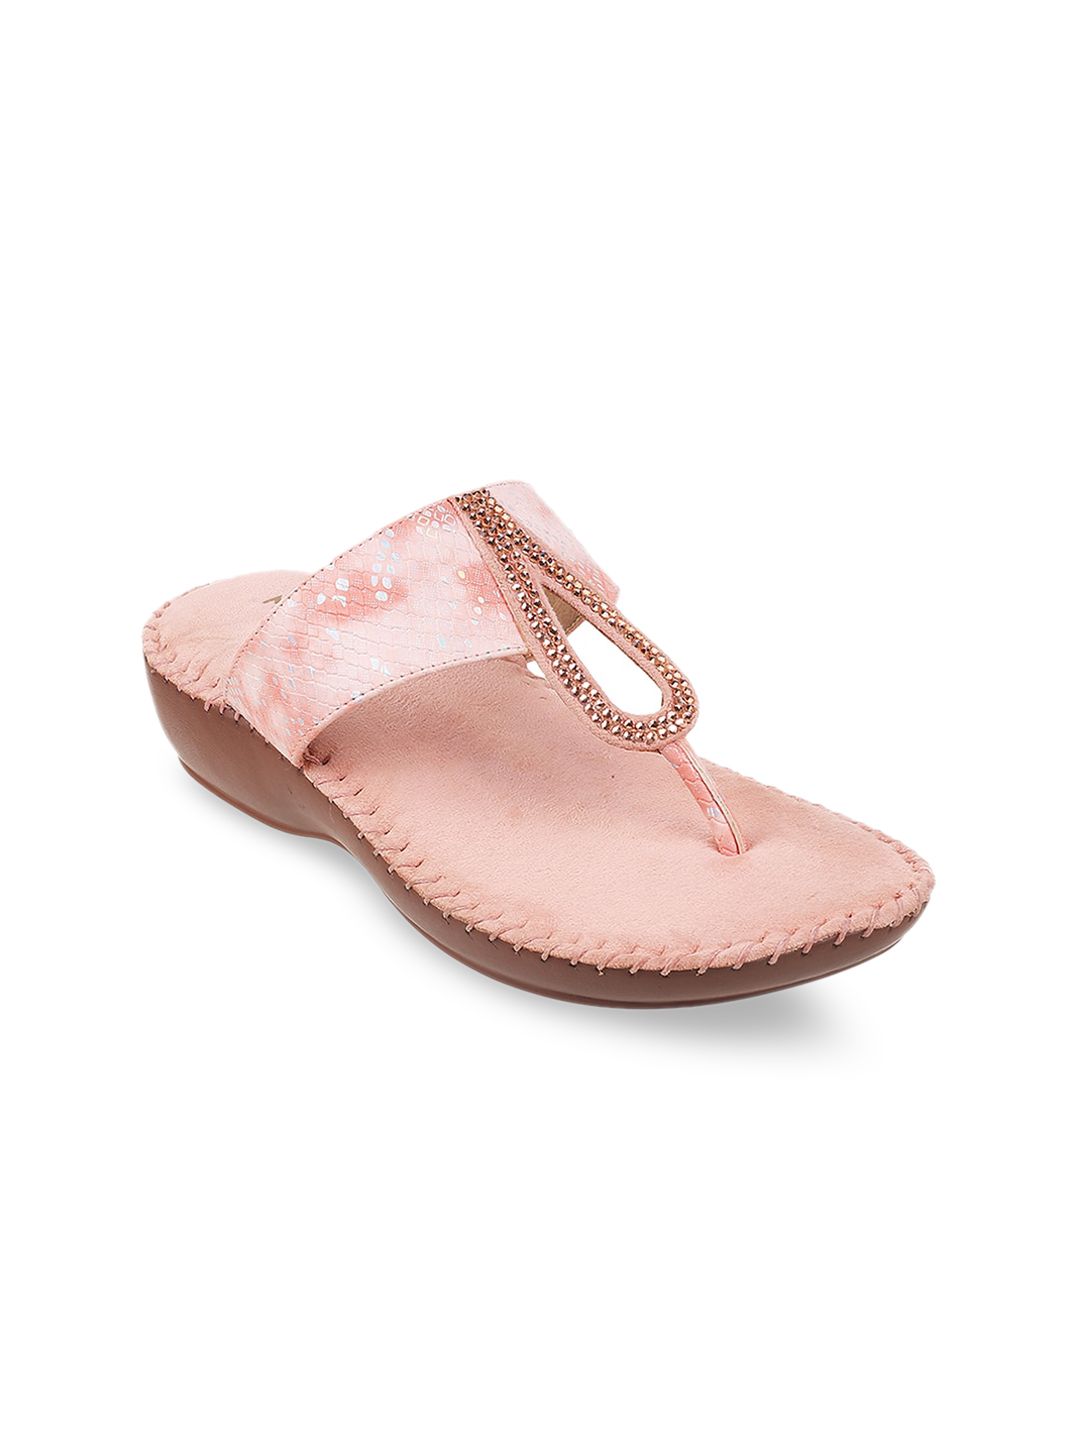 Mochi Pink Embellished Ethnic Comfort Heels Price in India